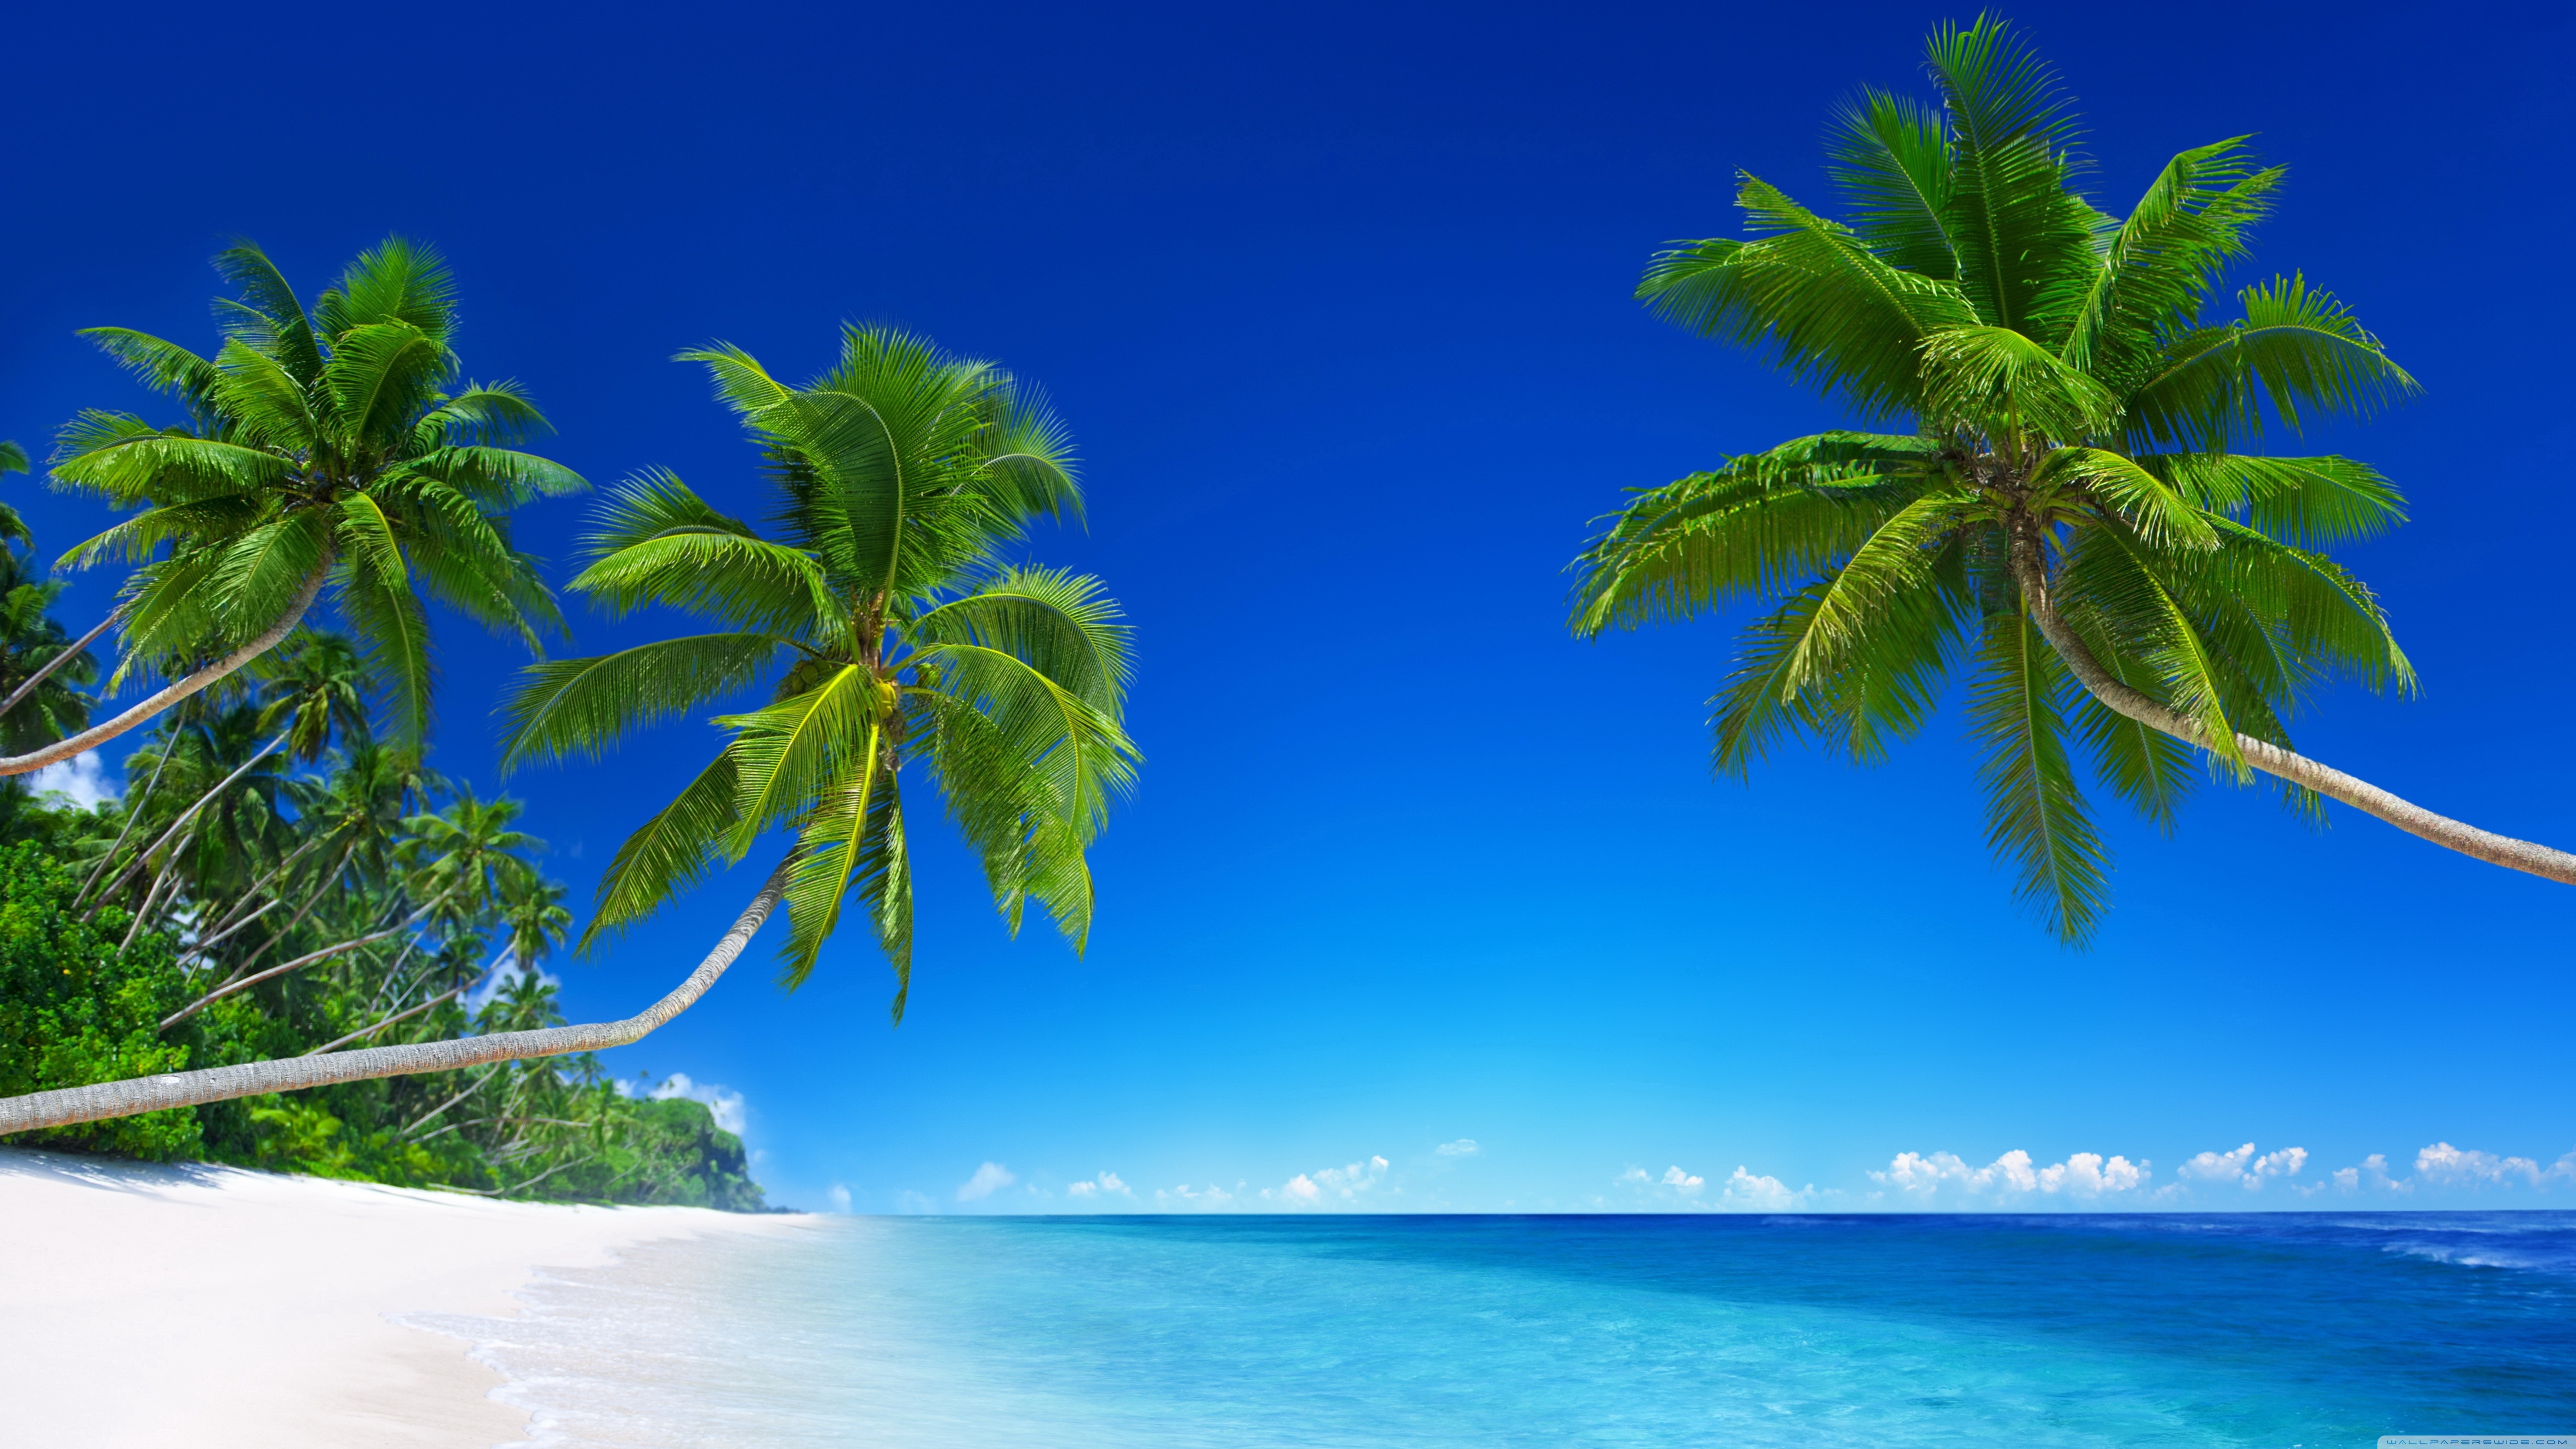 Tropical Beach Paradise 5k Ultra Hd Desktop Background Wallpaper For 4k Uhd Tv Tablet Smartphone